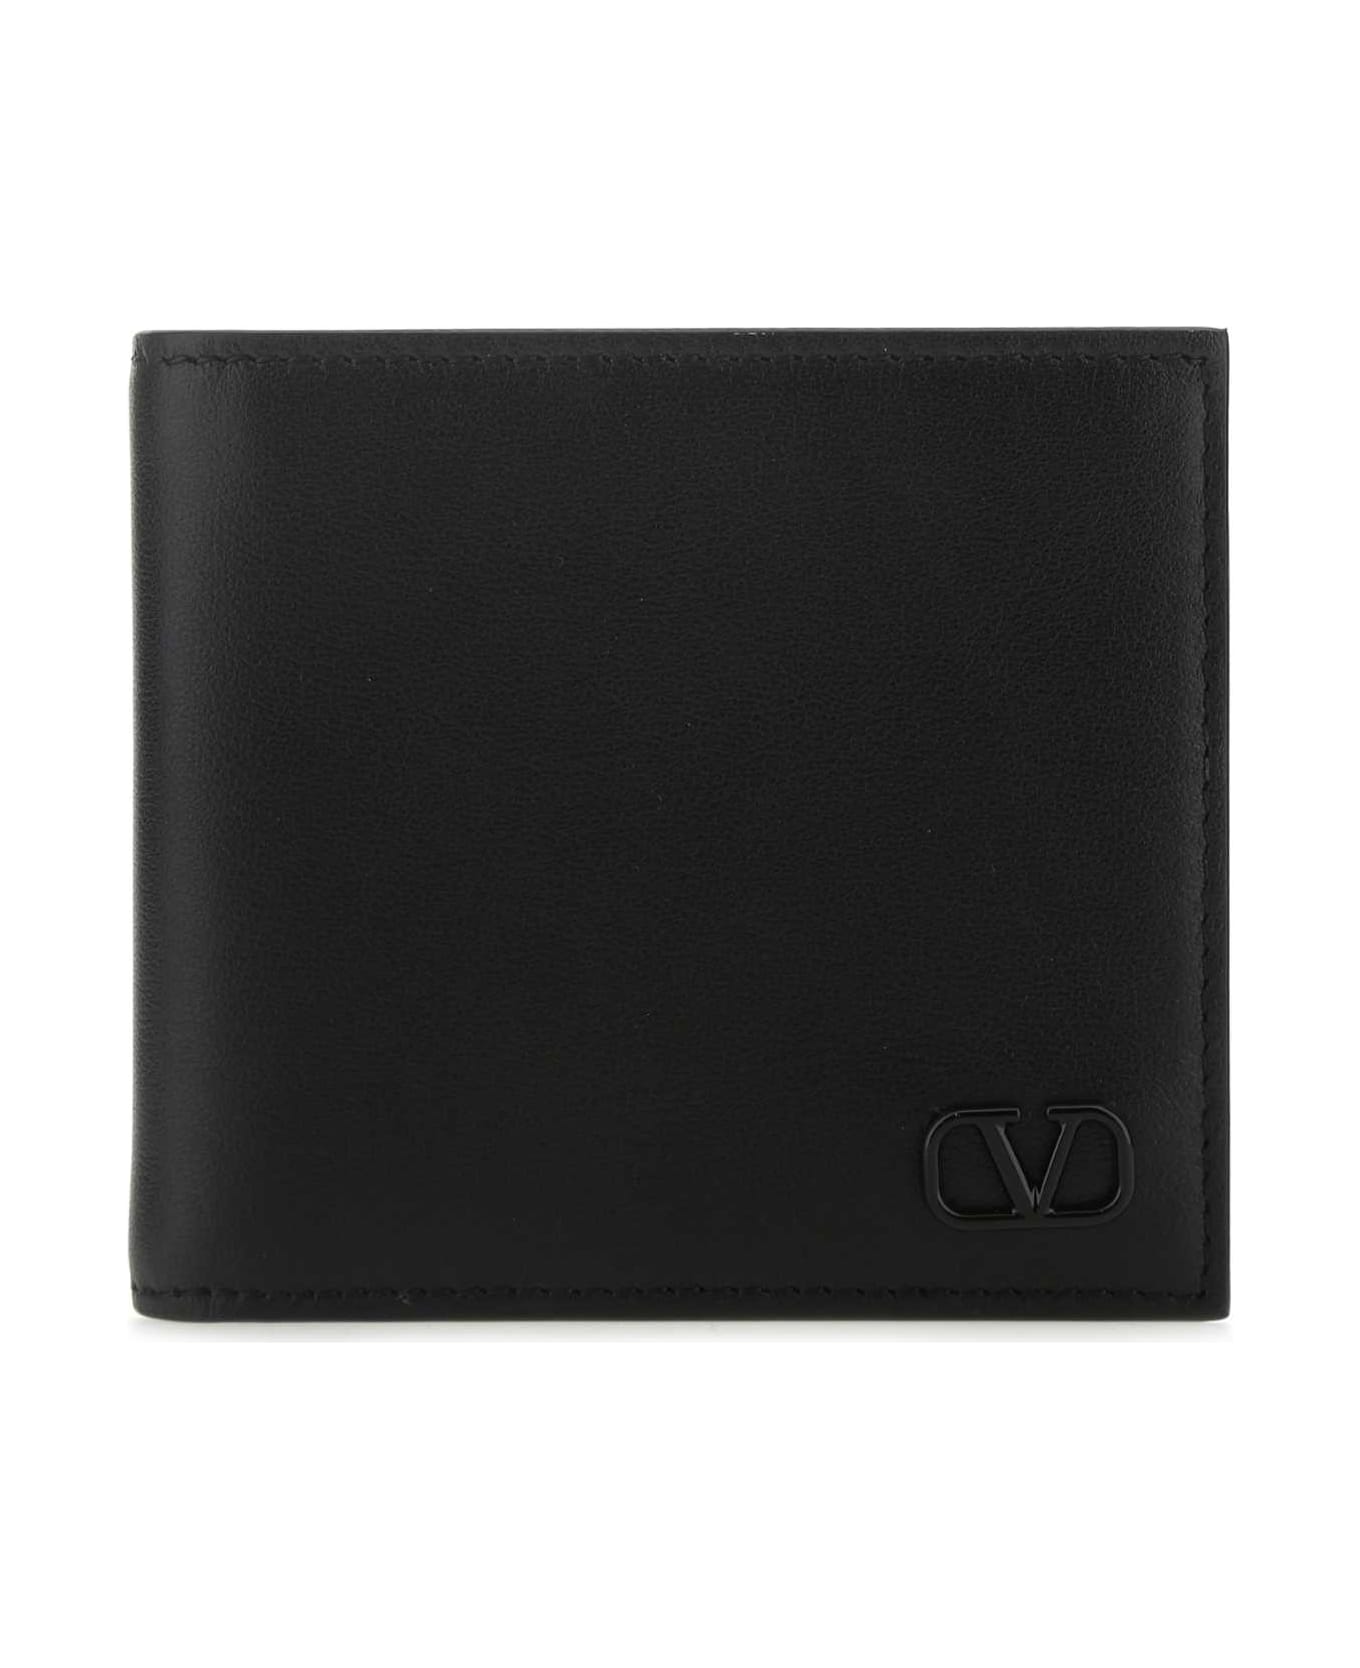 valentino jacket Garavani Black Leather Wallet - NERO